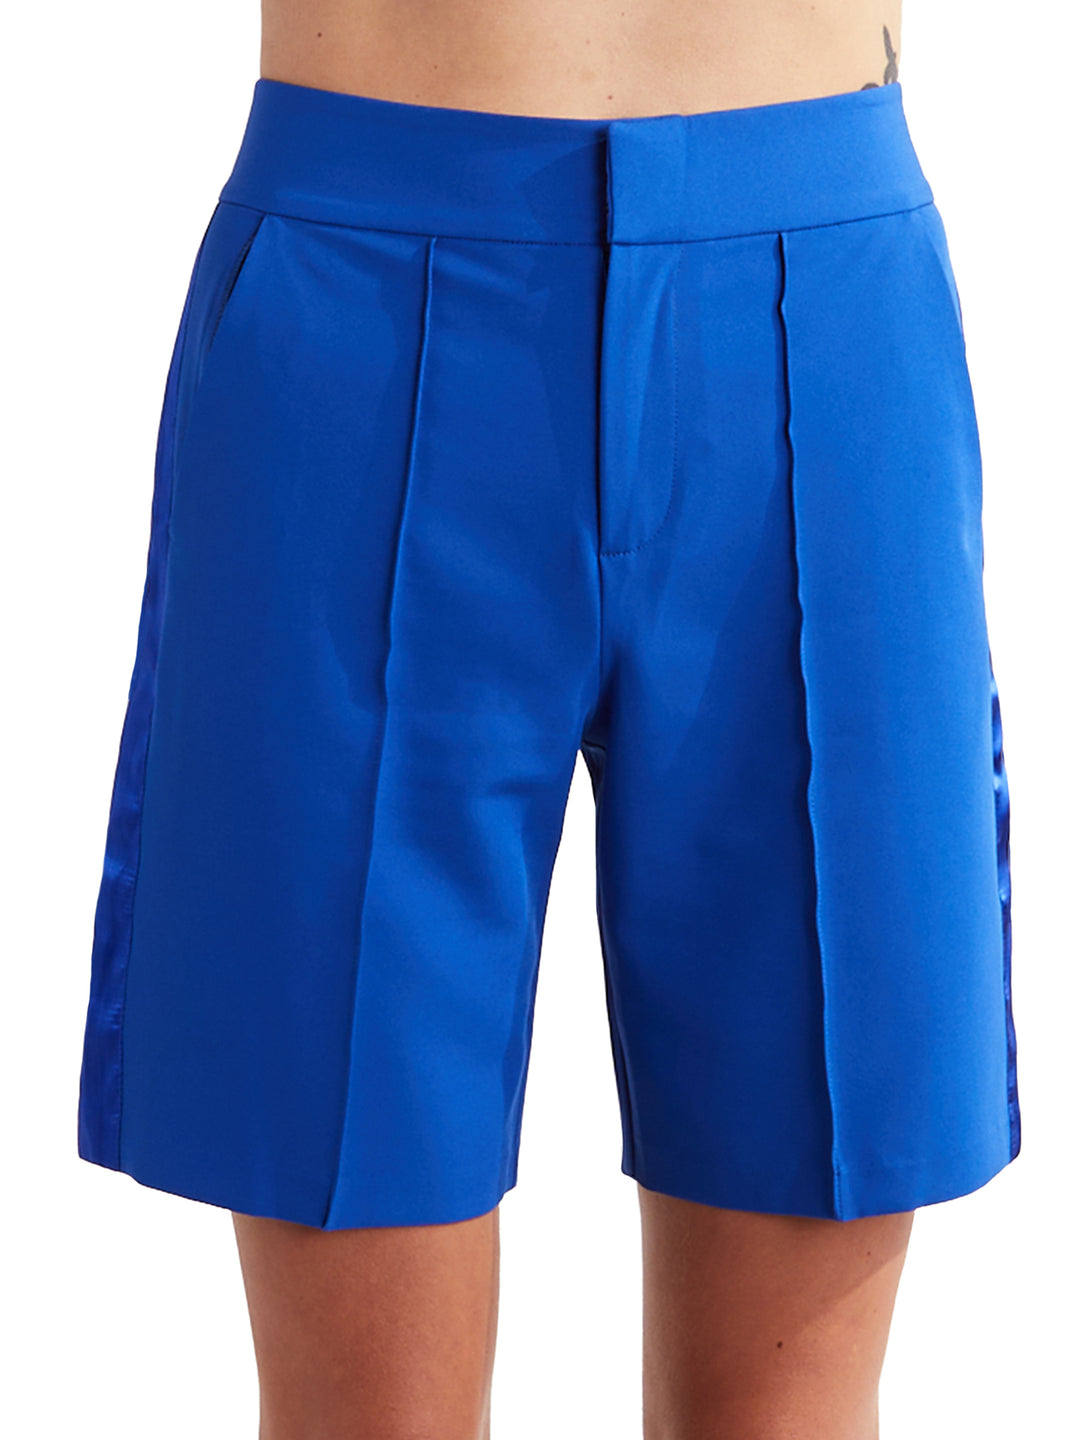 Tuxedo Shorts in Cobalt Blue